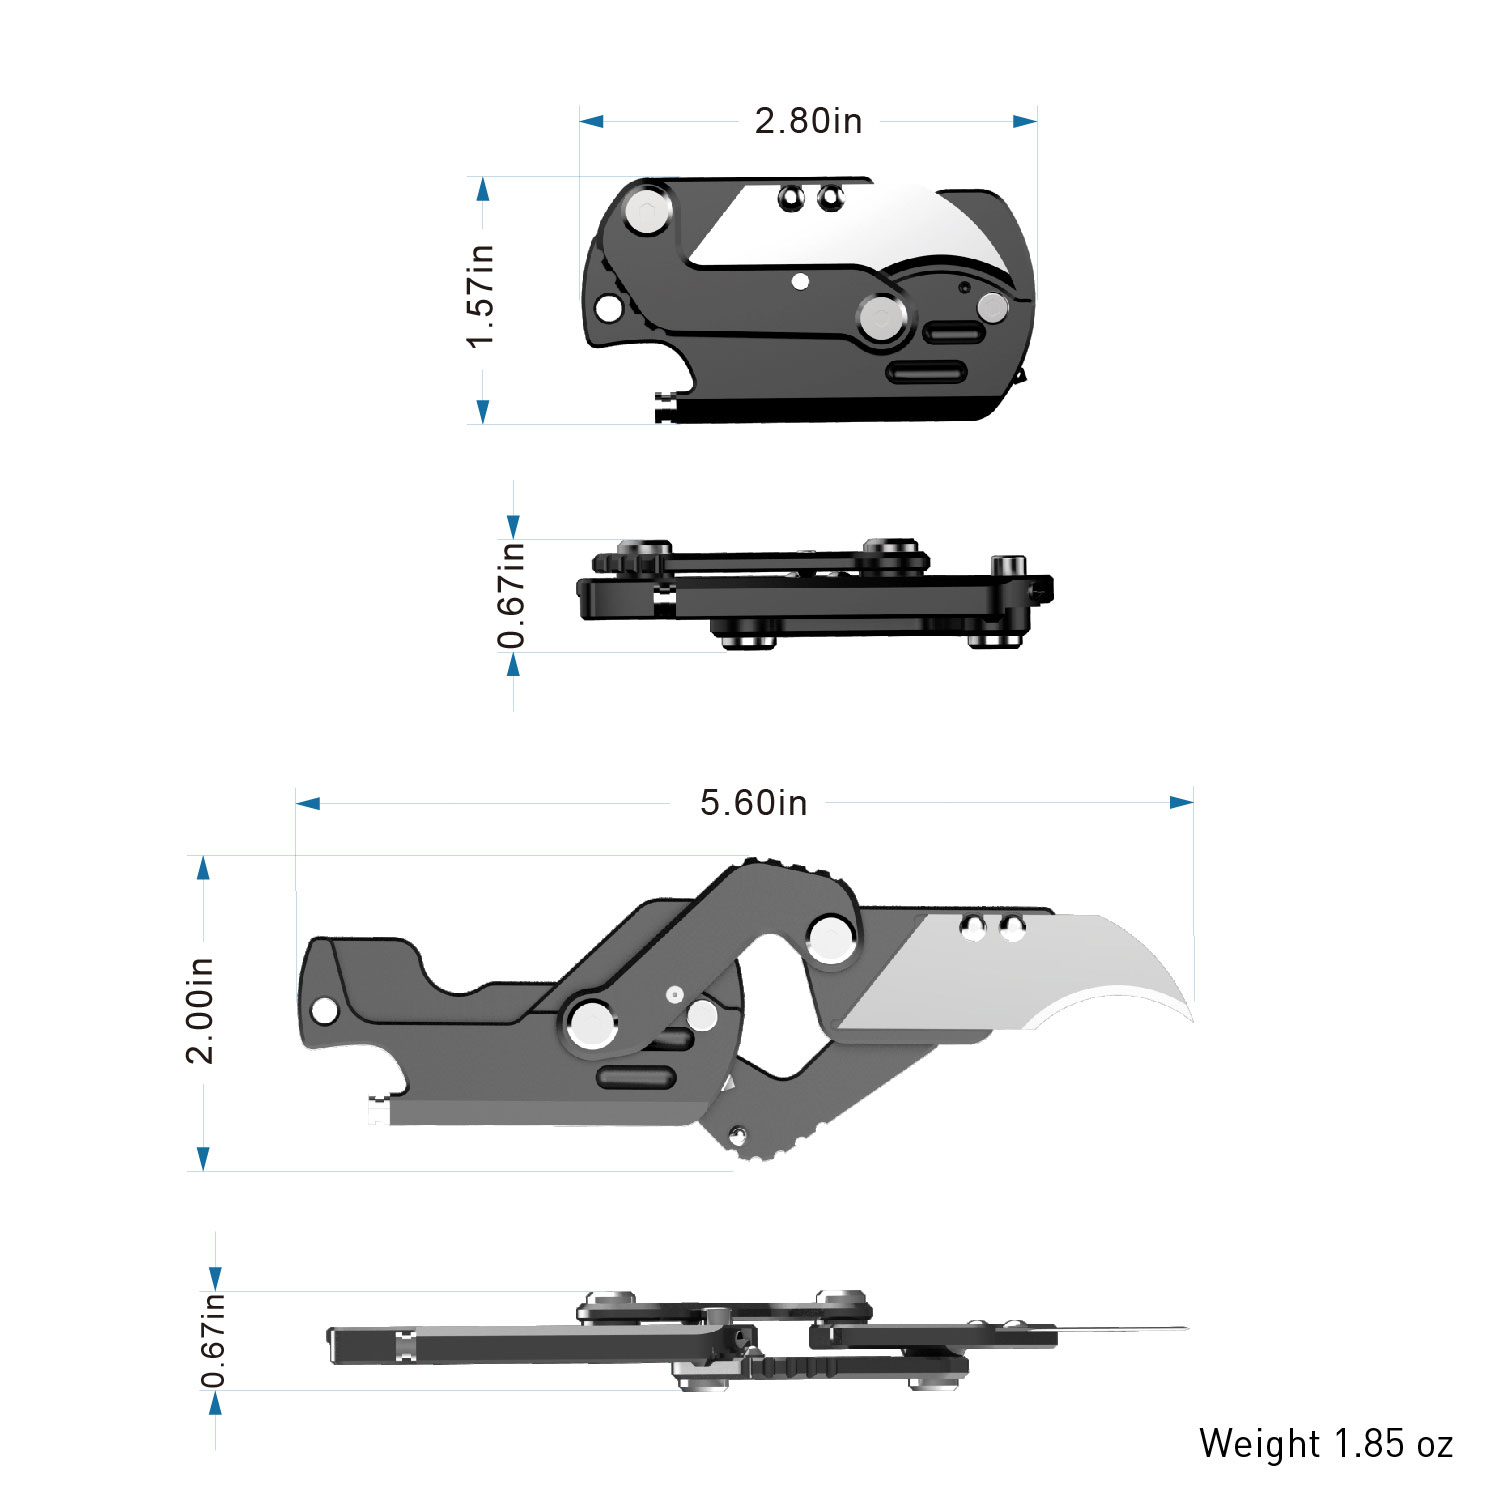 Stinger Dog Tag Blade Utility Knife, Original Design in USA